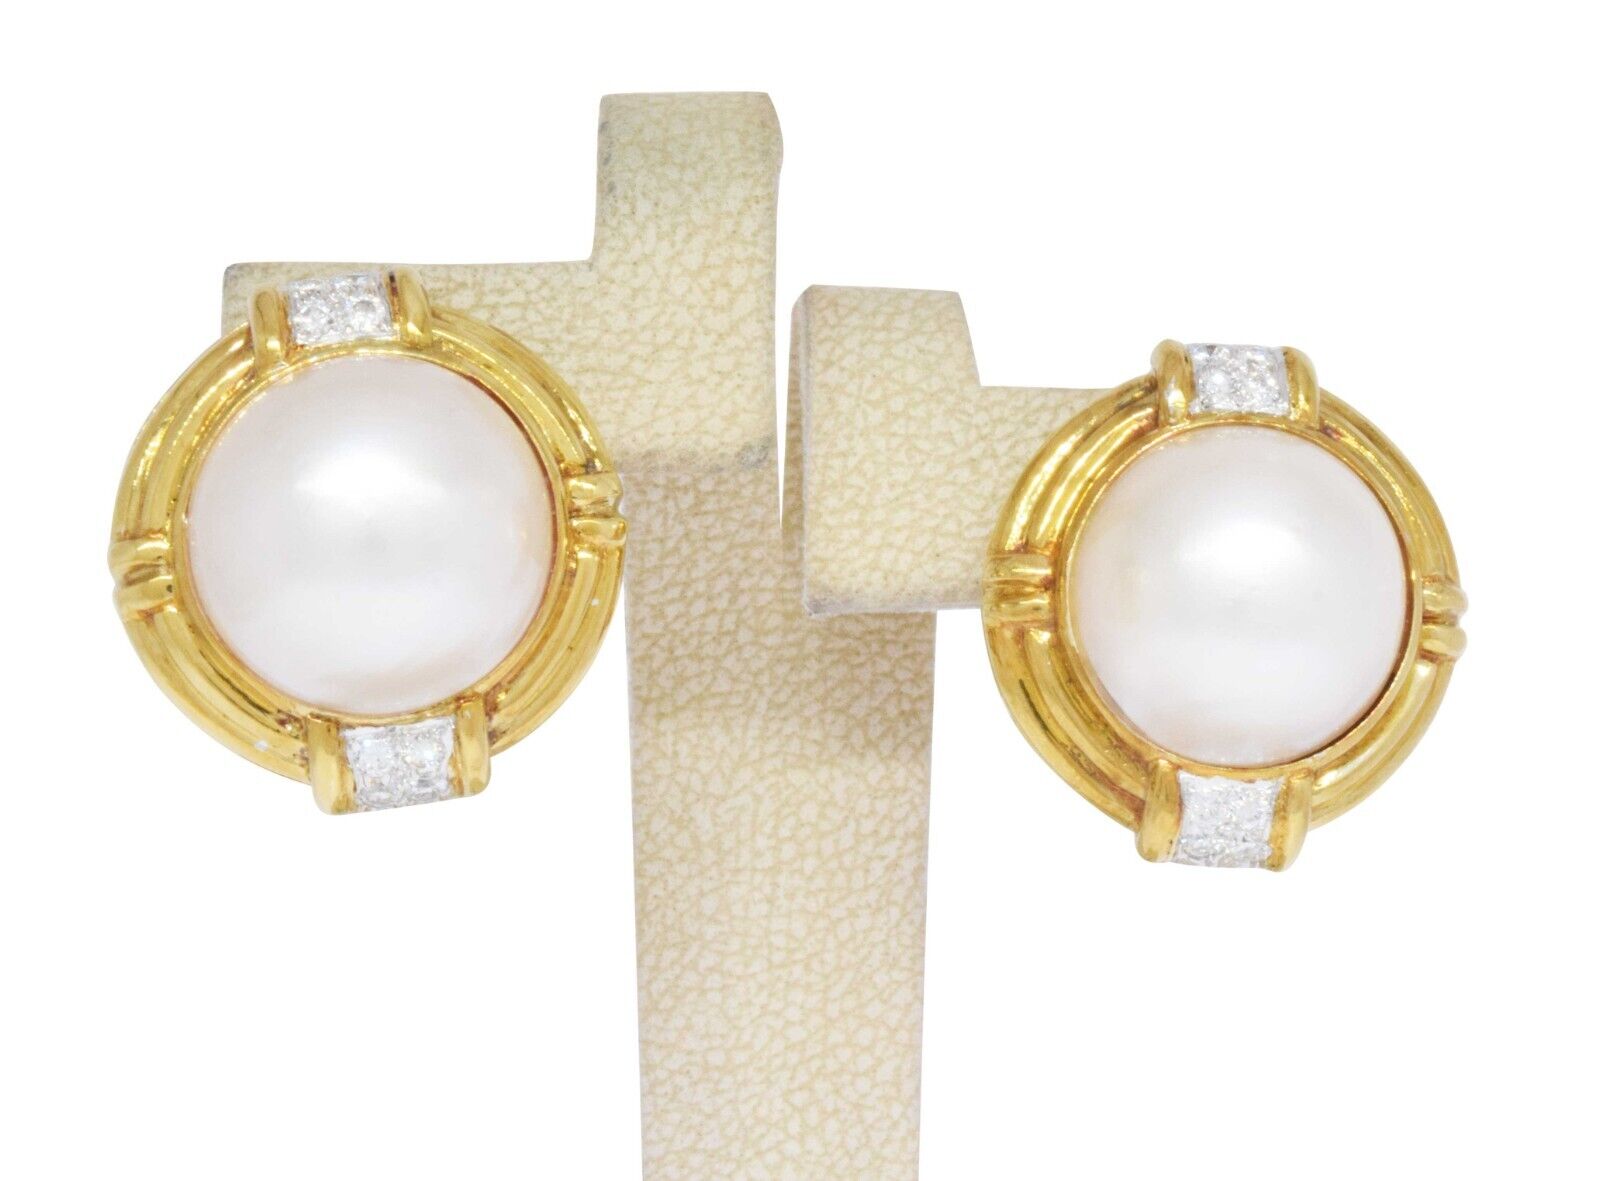 0.32 Carat Diamond & Mabe Pearl & 18k Yellow Gold Earrings